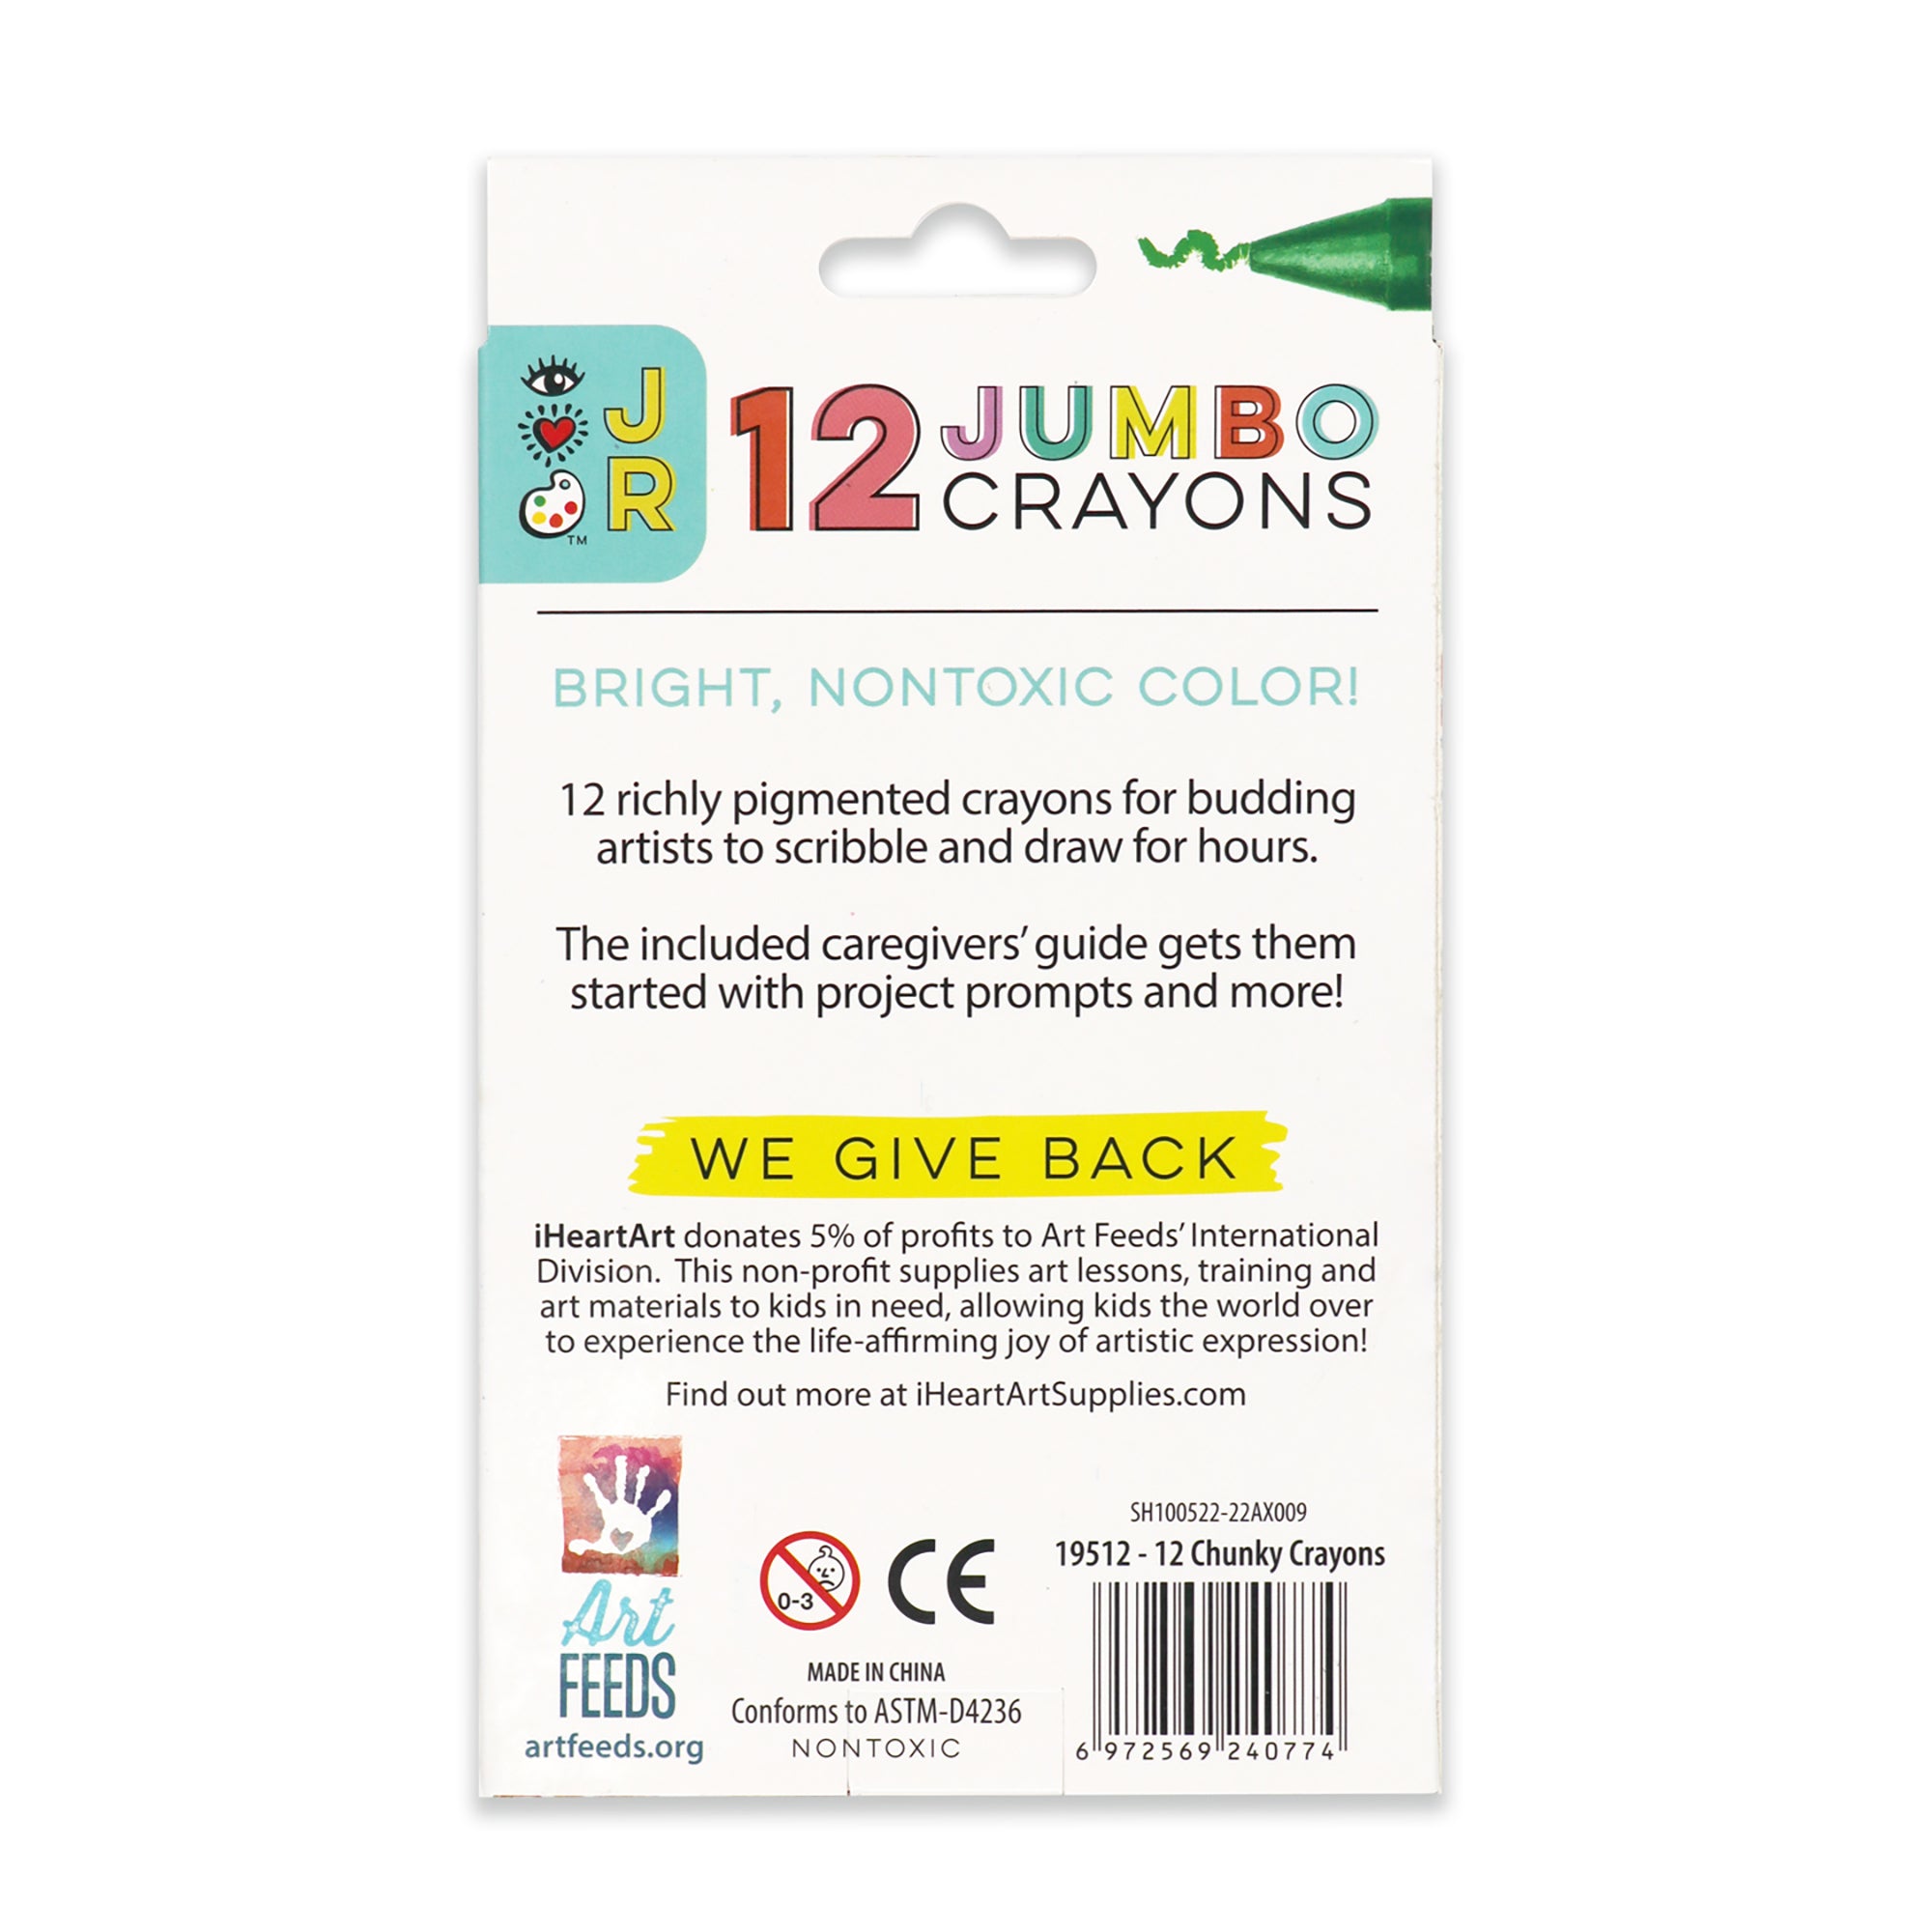 Crayola Jumbo Wax Crayons My First 8-Pack Easy Grip Chunky